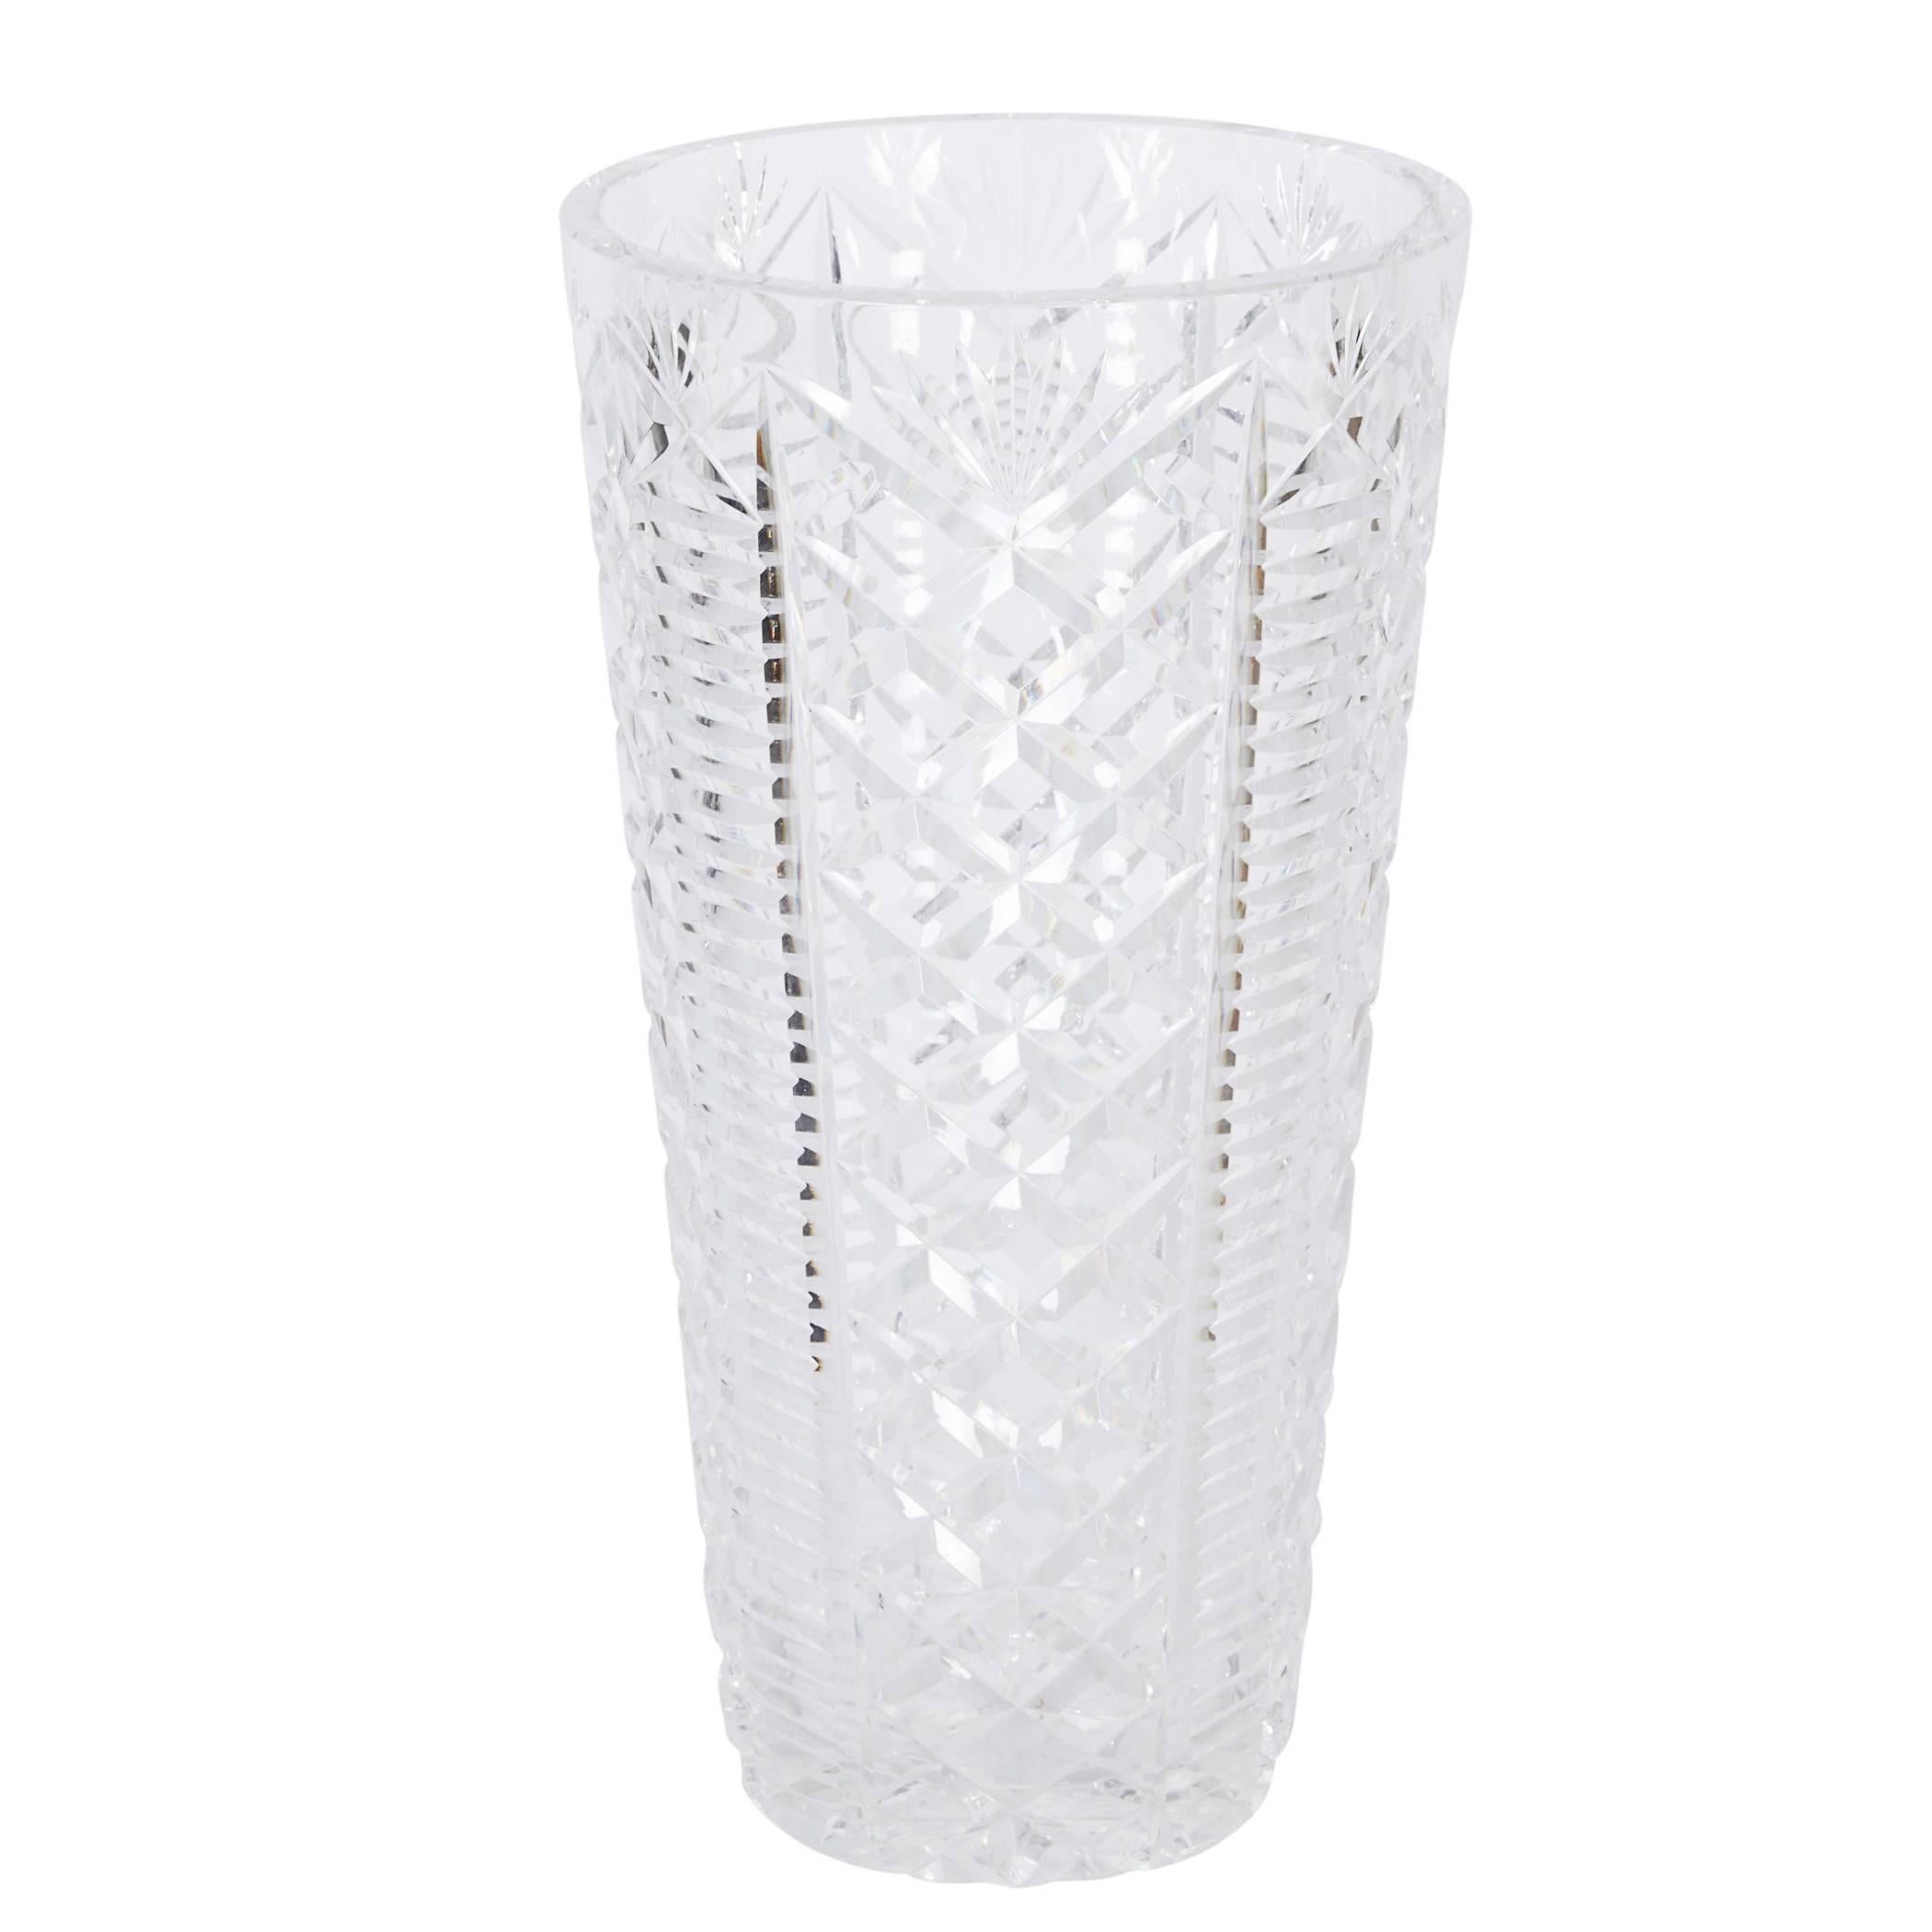 Waterford Crystal 'Clare' Pattern Vase